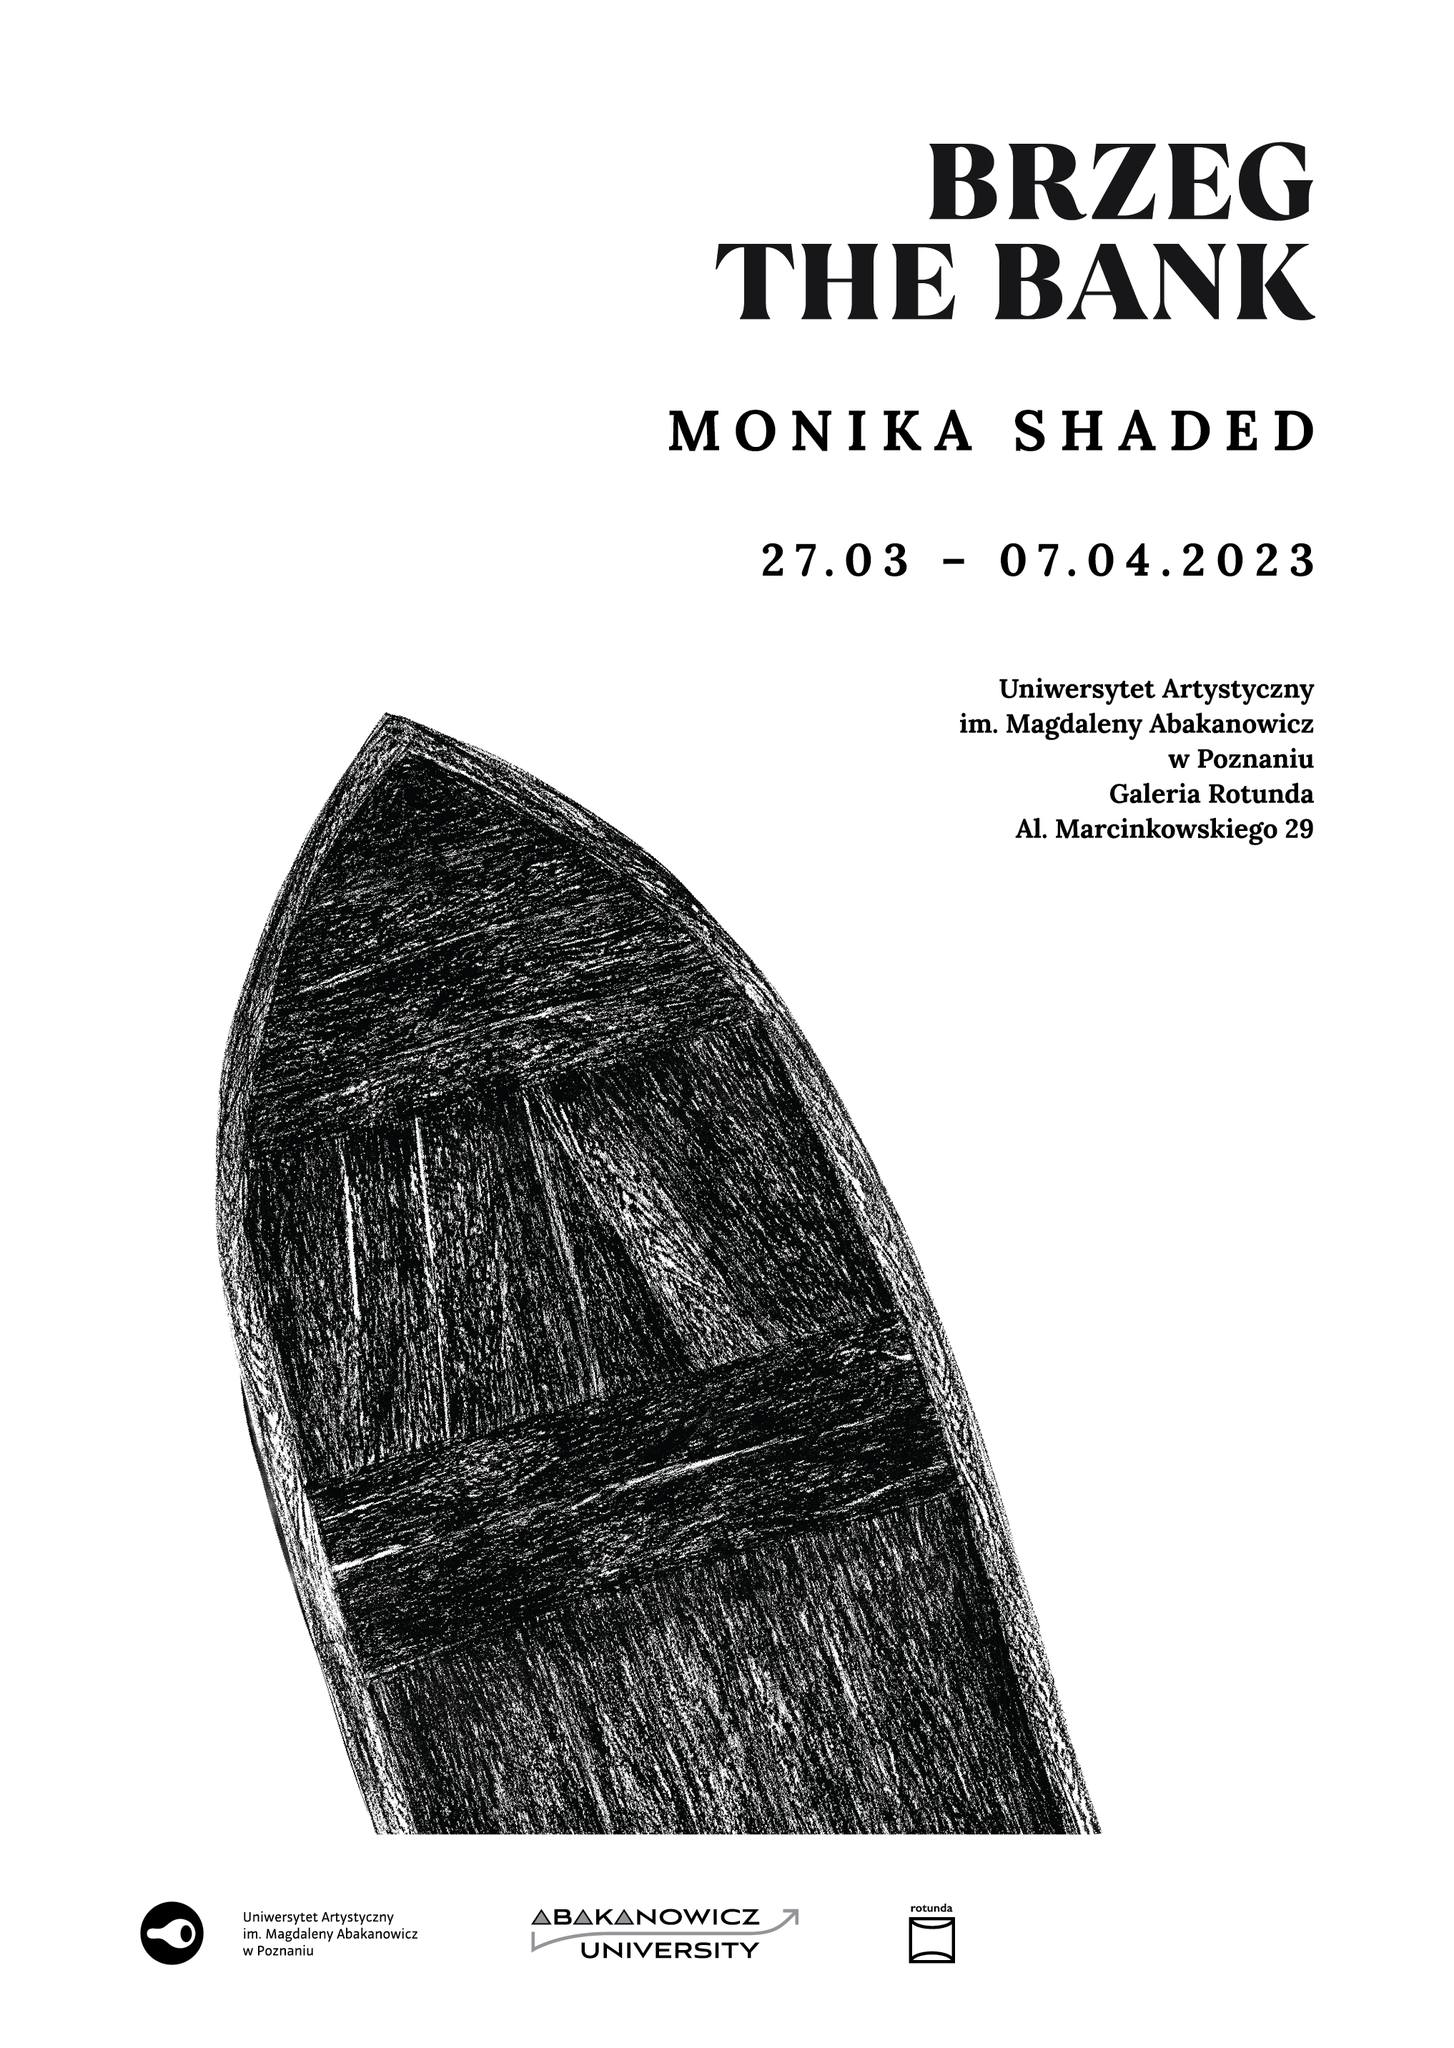 Monika Shaded wystawa "Brzeg" - Organizator